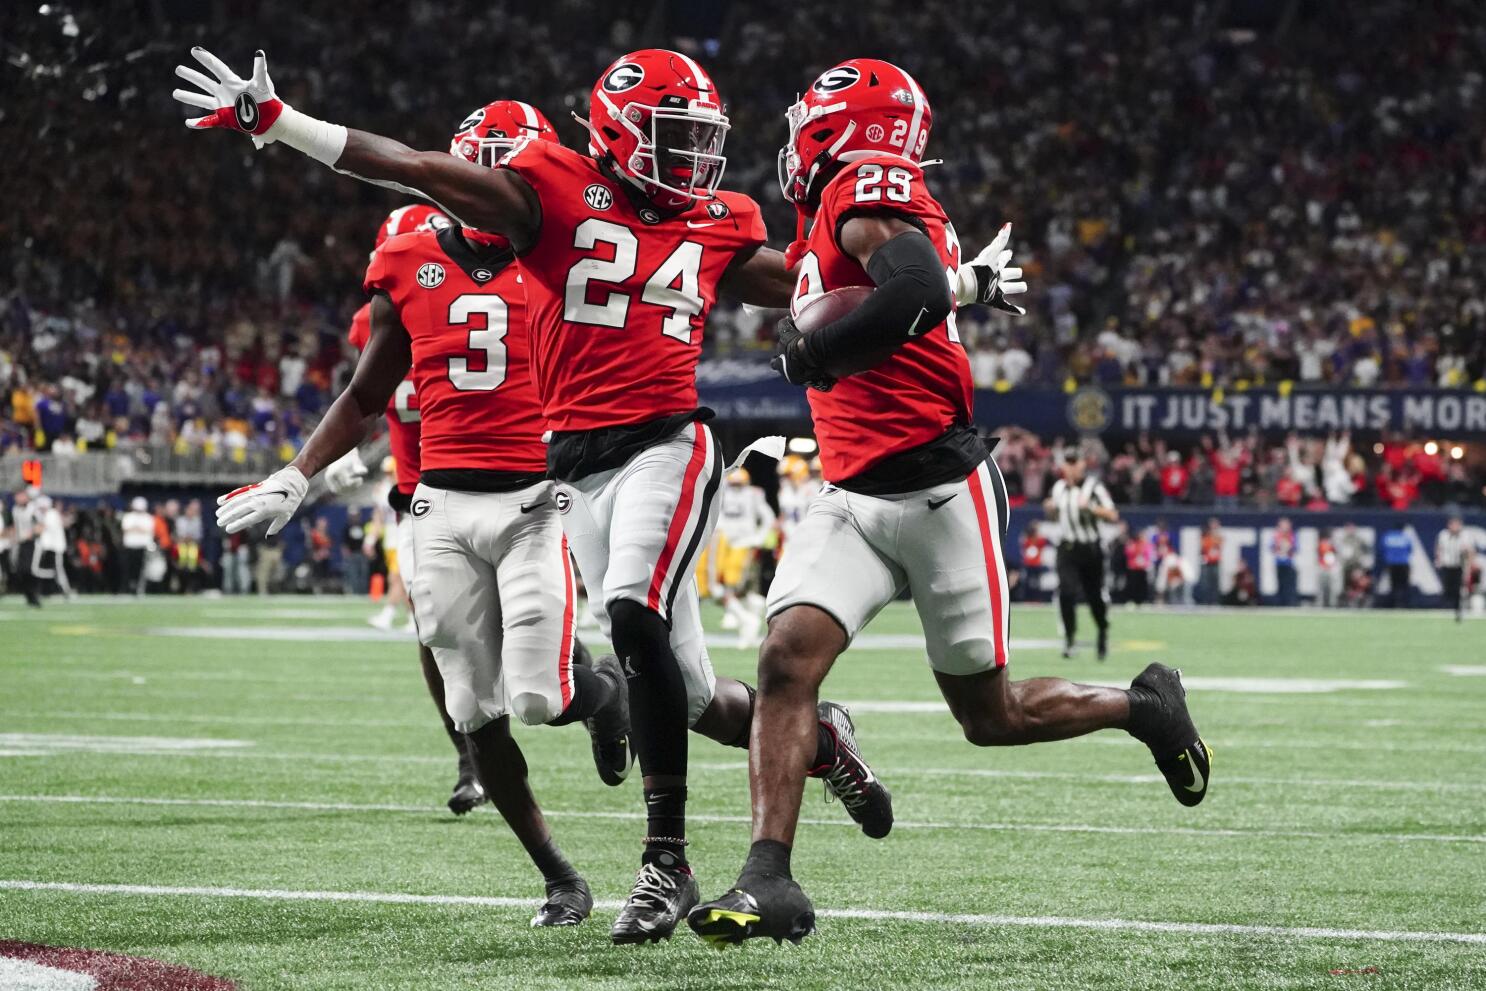 CFP National Championship 2022 - Sports world erupts as Georgia Bulldogs  defeat Alabama Crimson Tide - ESPN